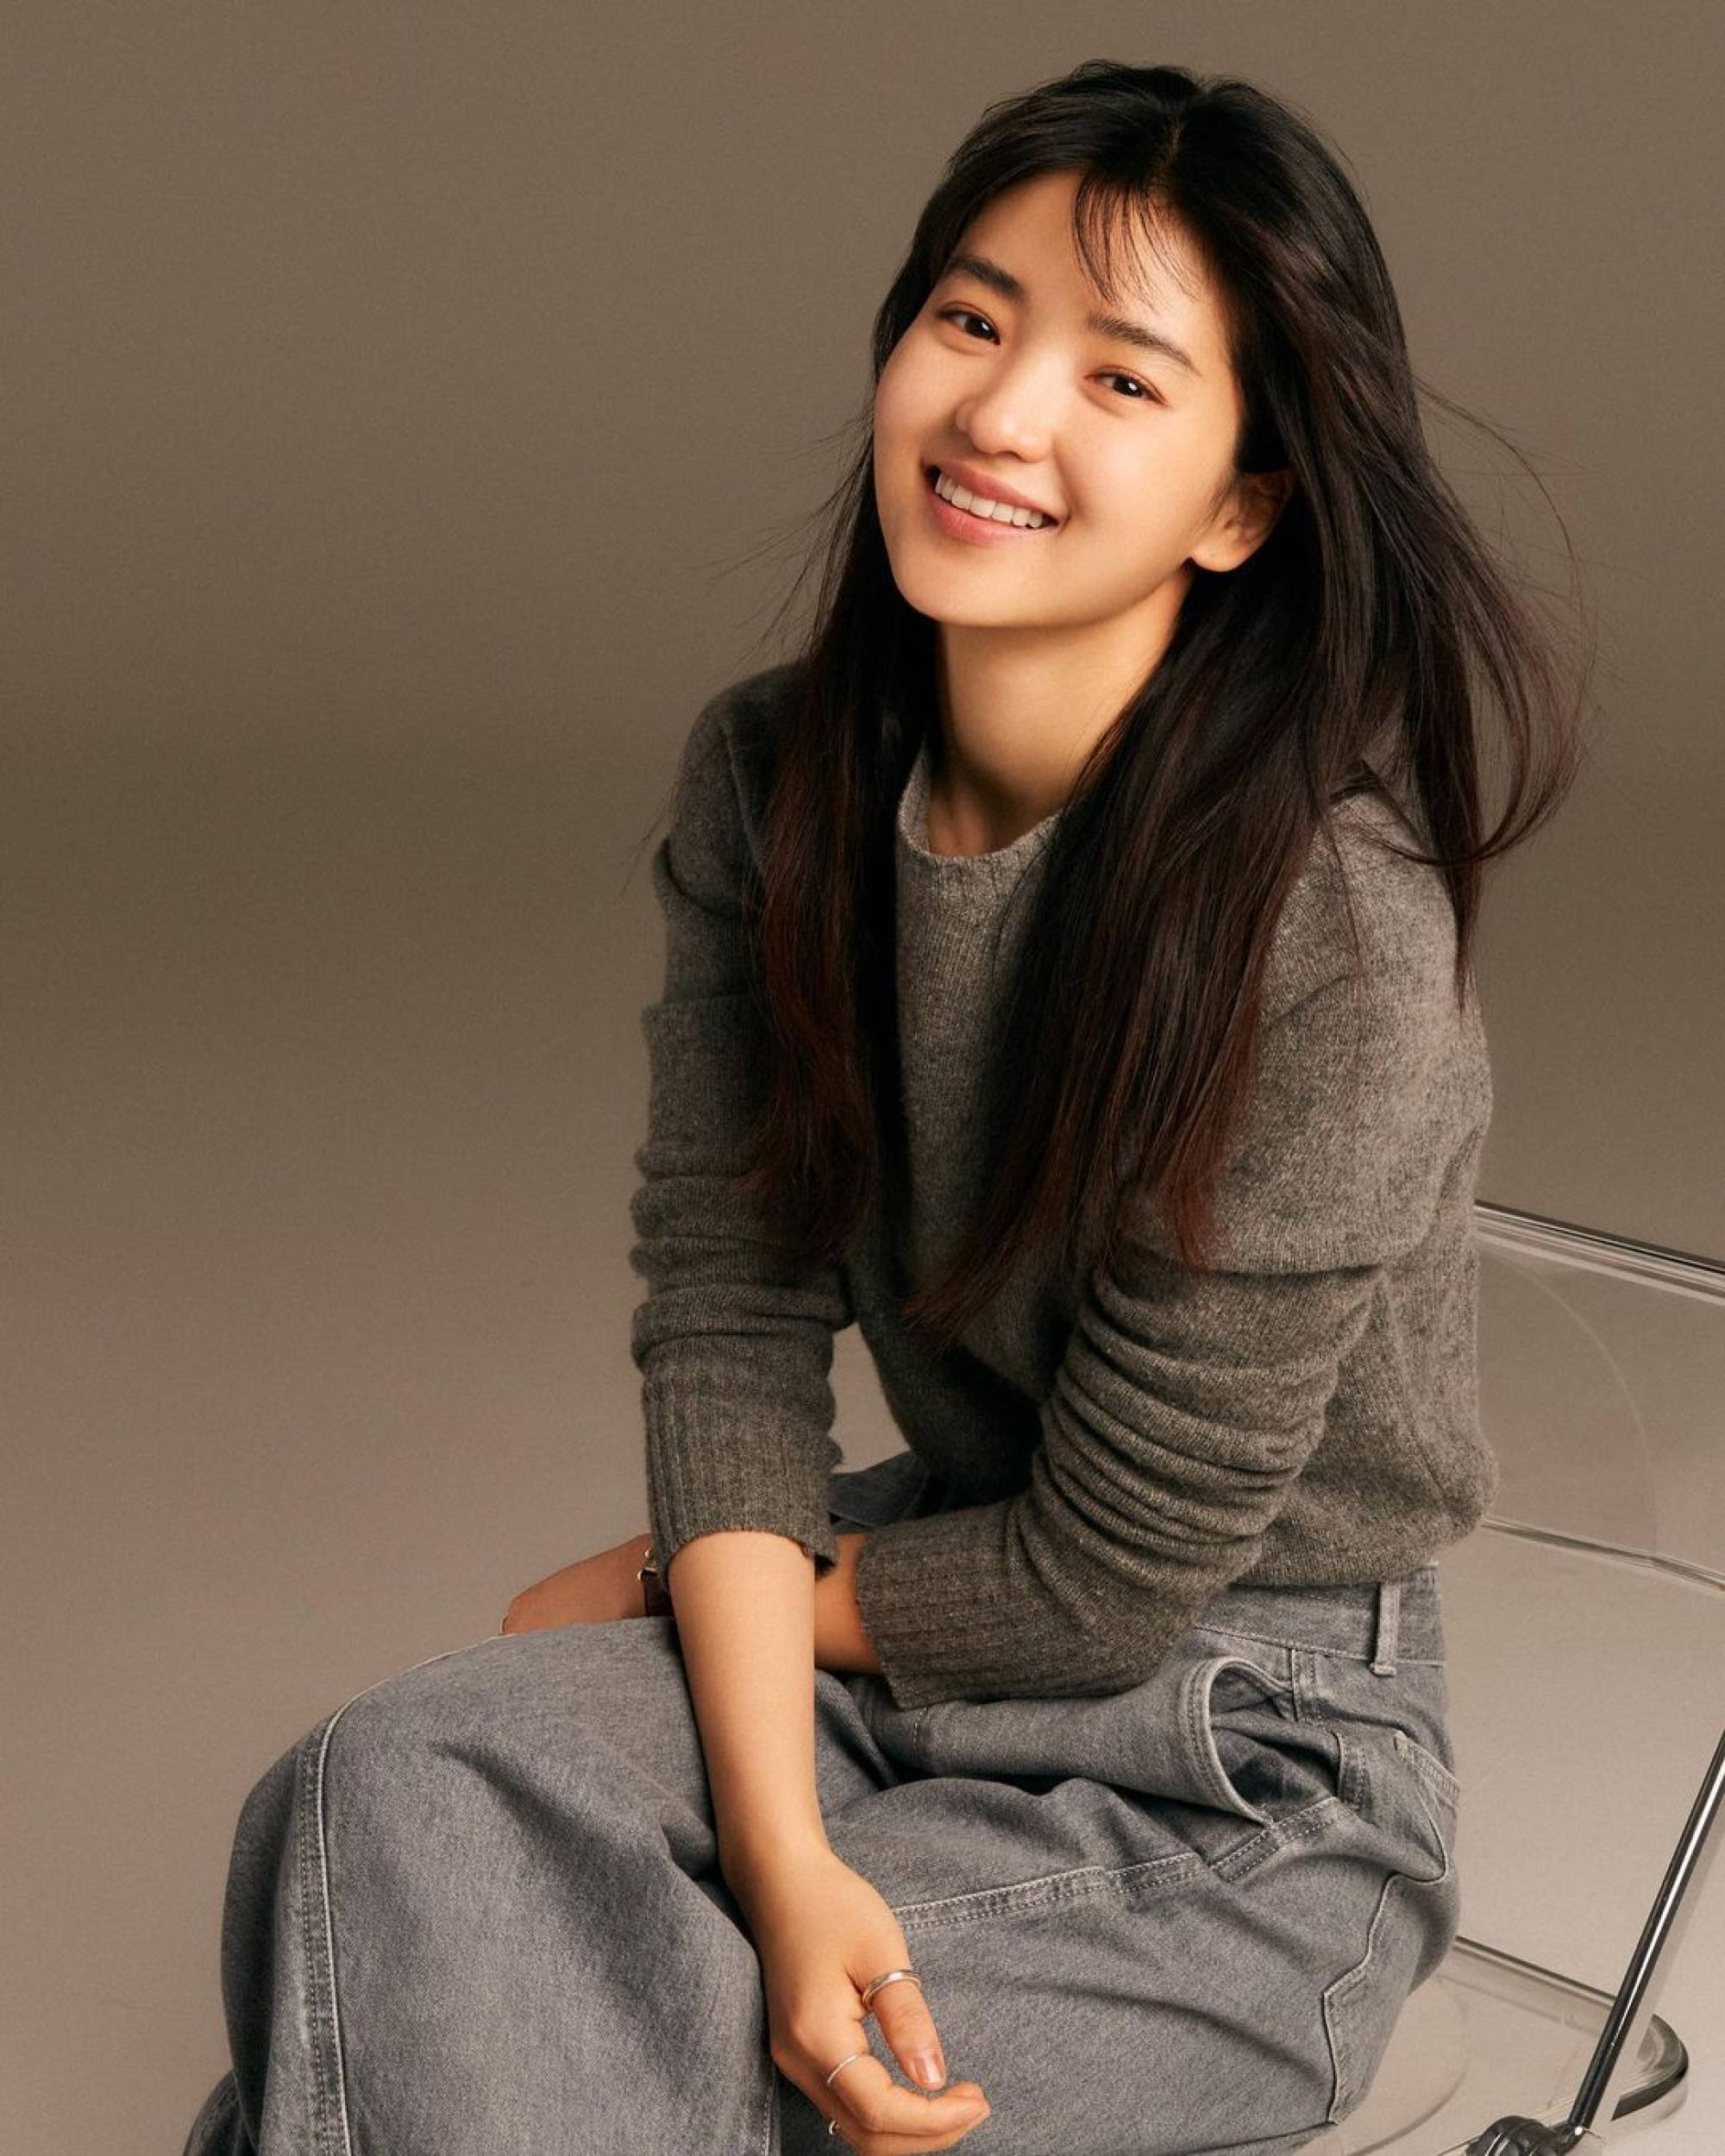 Actress Go Min Si's photoshoot revealed